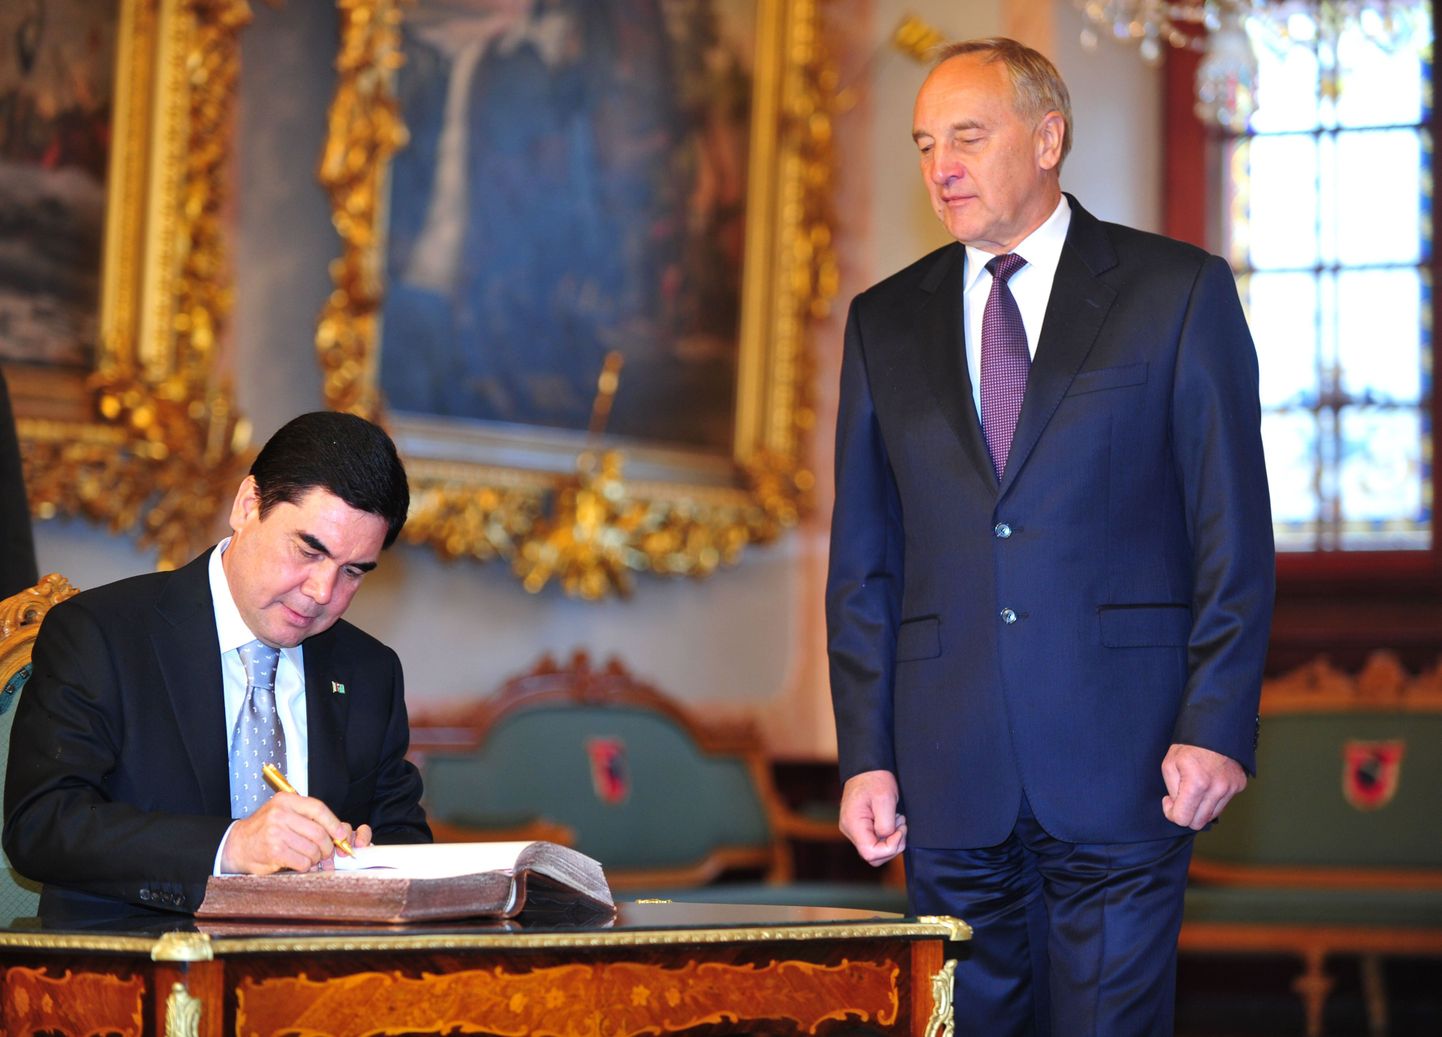 Läti president Andris Berzinš (paremal) ja tema Türkmenistani ametivend Gurbangulõ Berdõmuhammedov täna Riias.